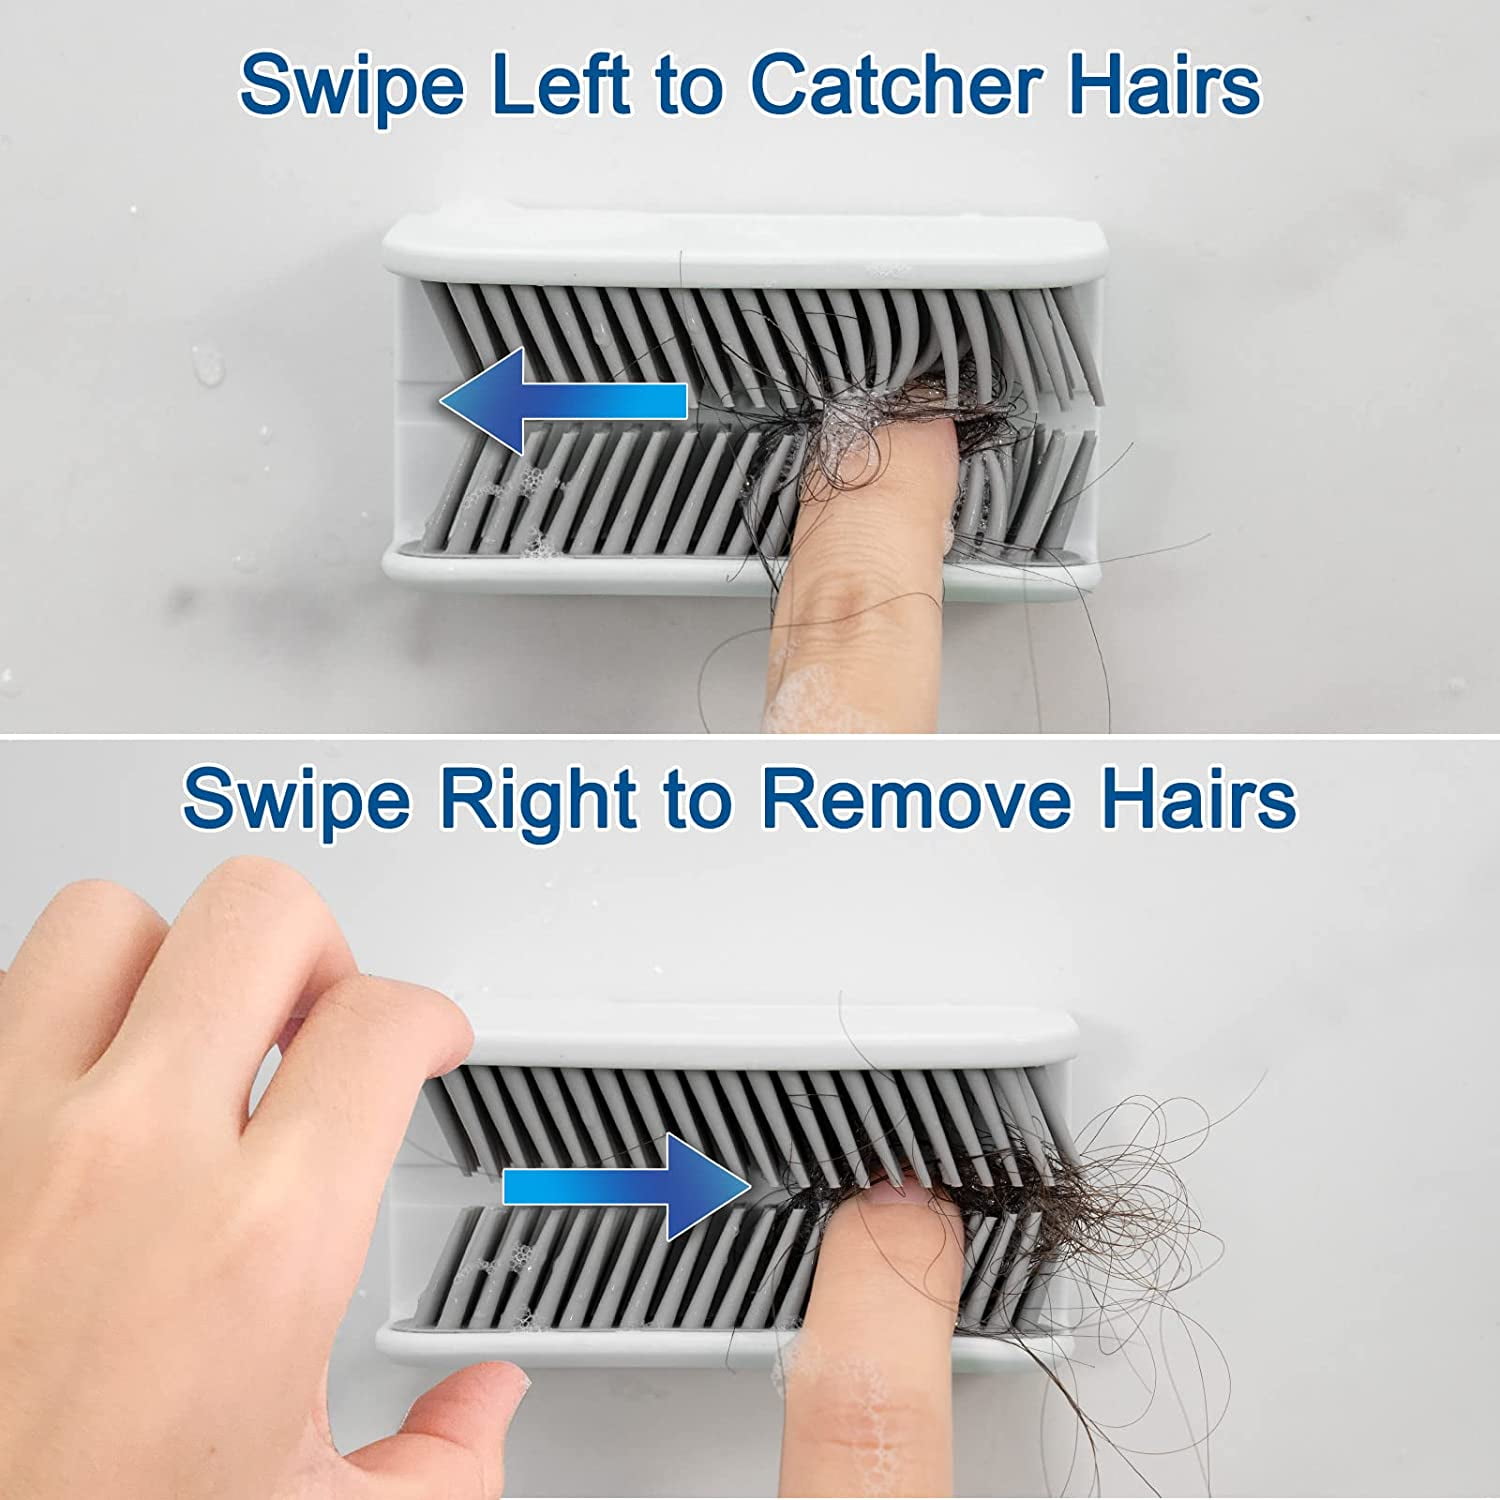 Hunpta Hair Catcher Shower Wall Hair Trap for Shower Drain Hair Catcher Hair Collector, Blue